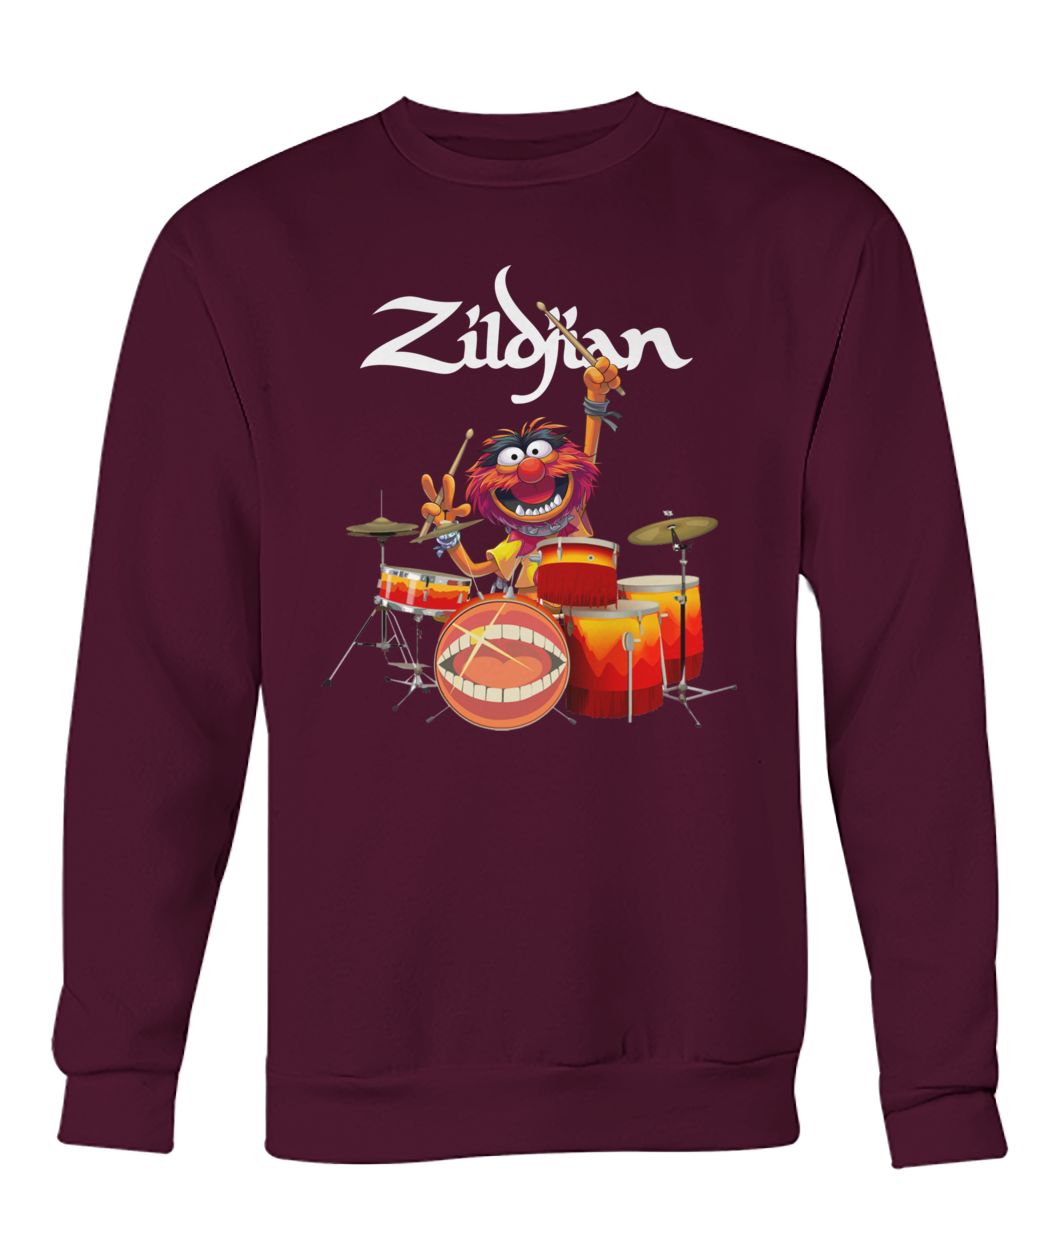 Muppets animal drummer zildjian crew neck sweatshirt